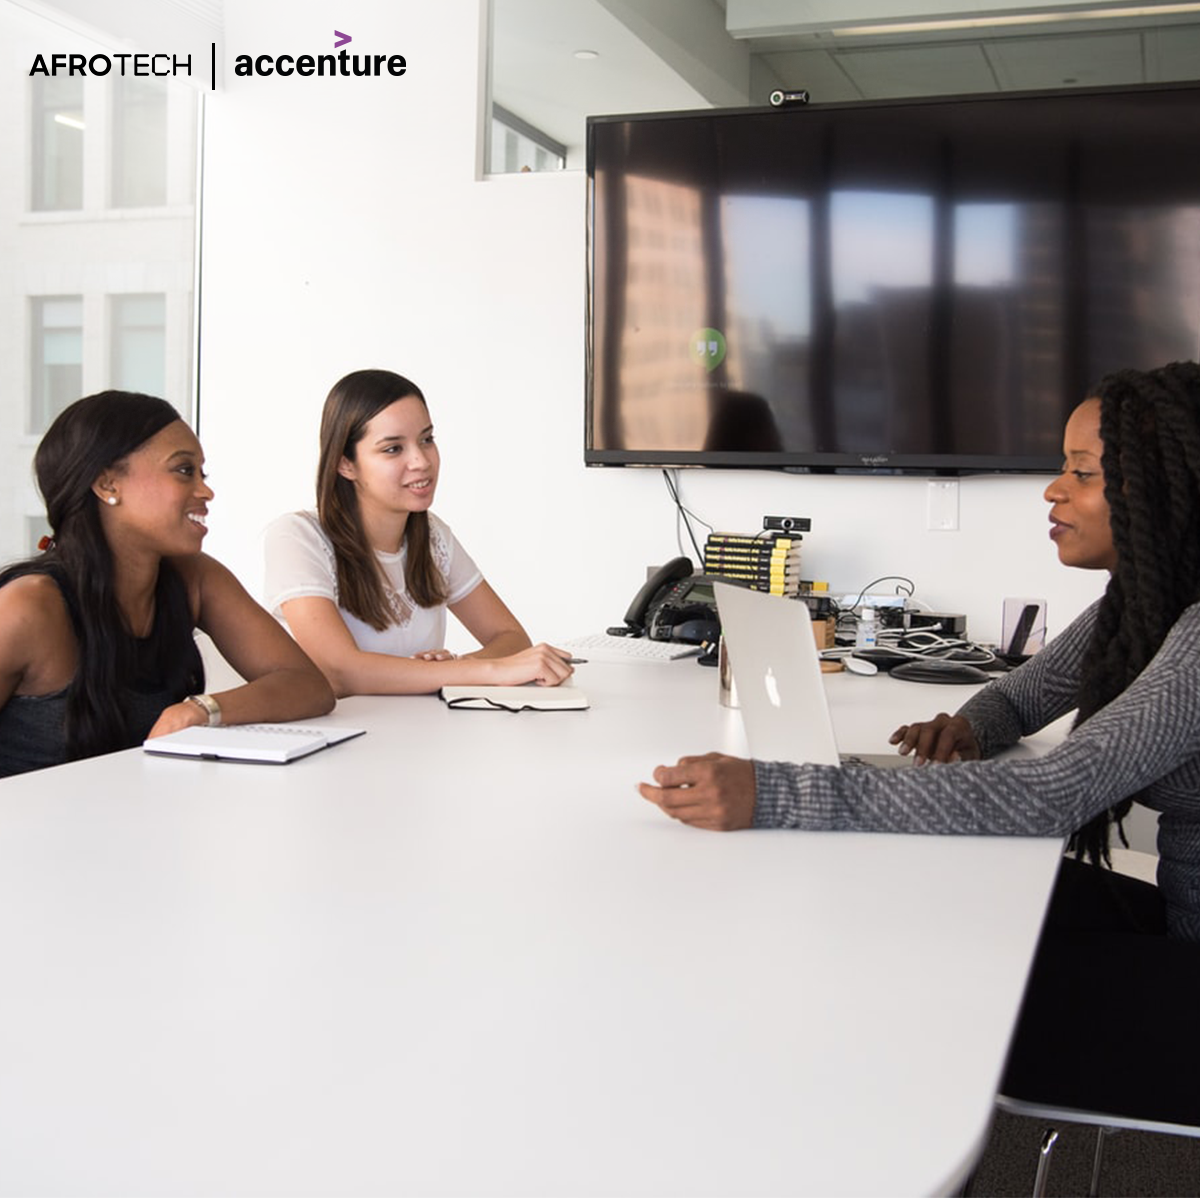 Tech Jobs: 10 Ways to Get Accenture's Attention